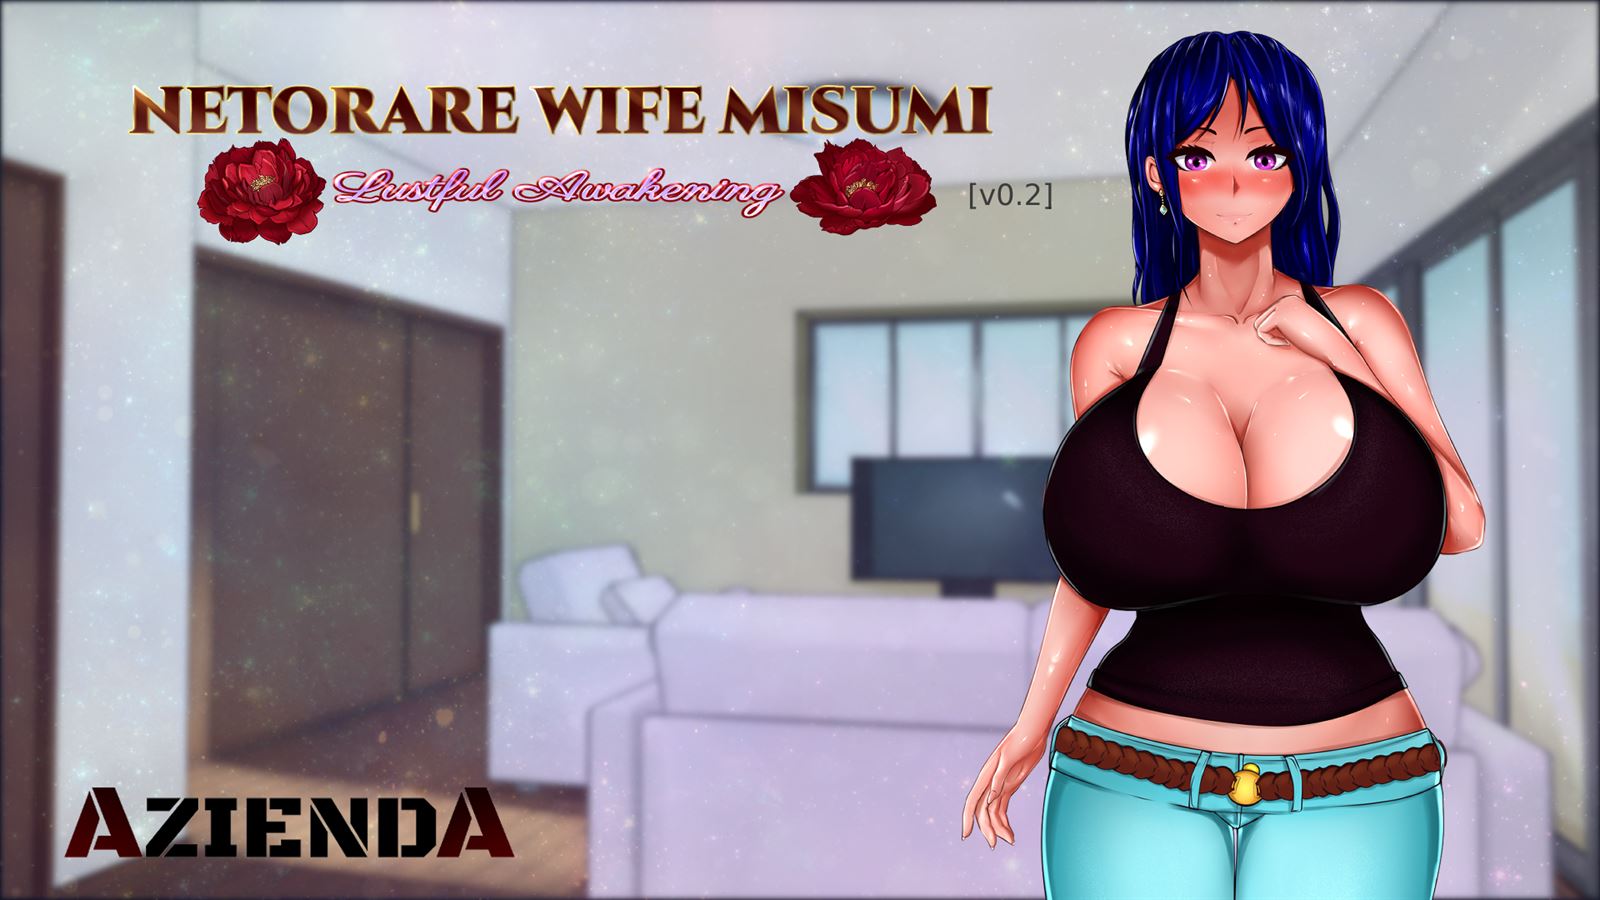 Netorare Wife Misumi Lustful Awakening porn xxx game download cover